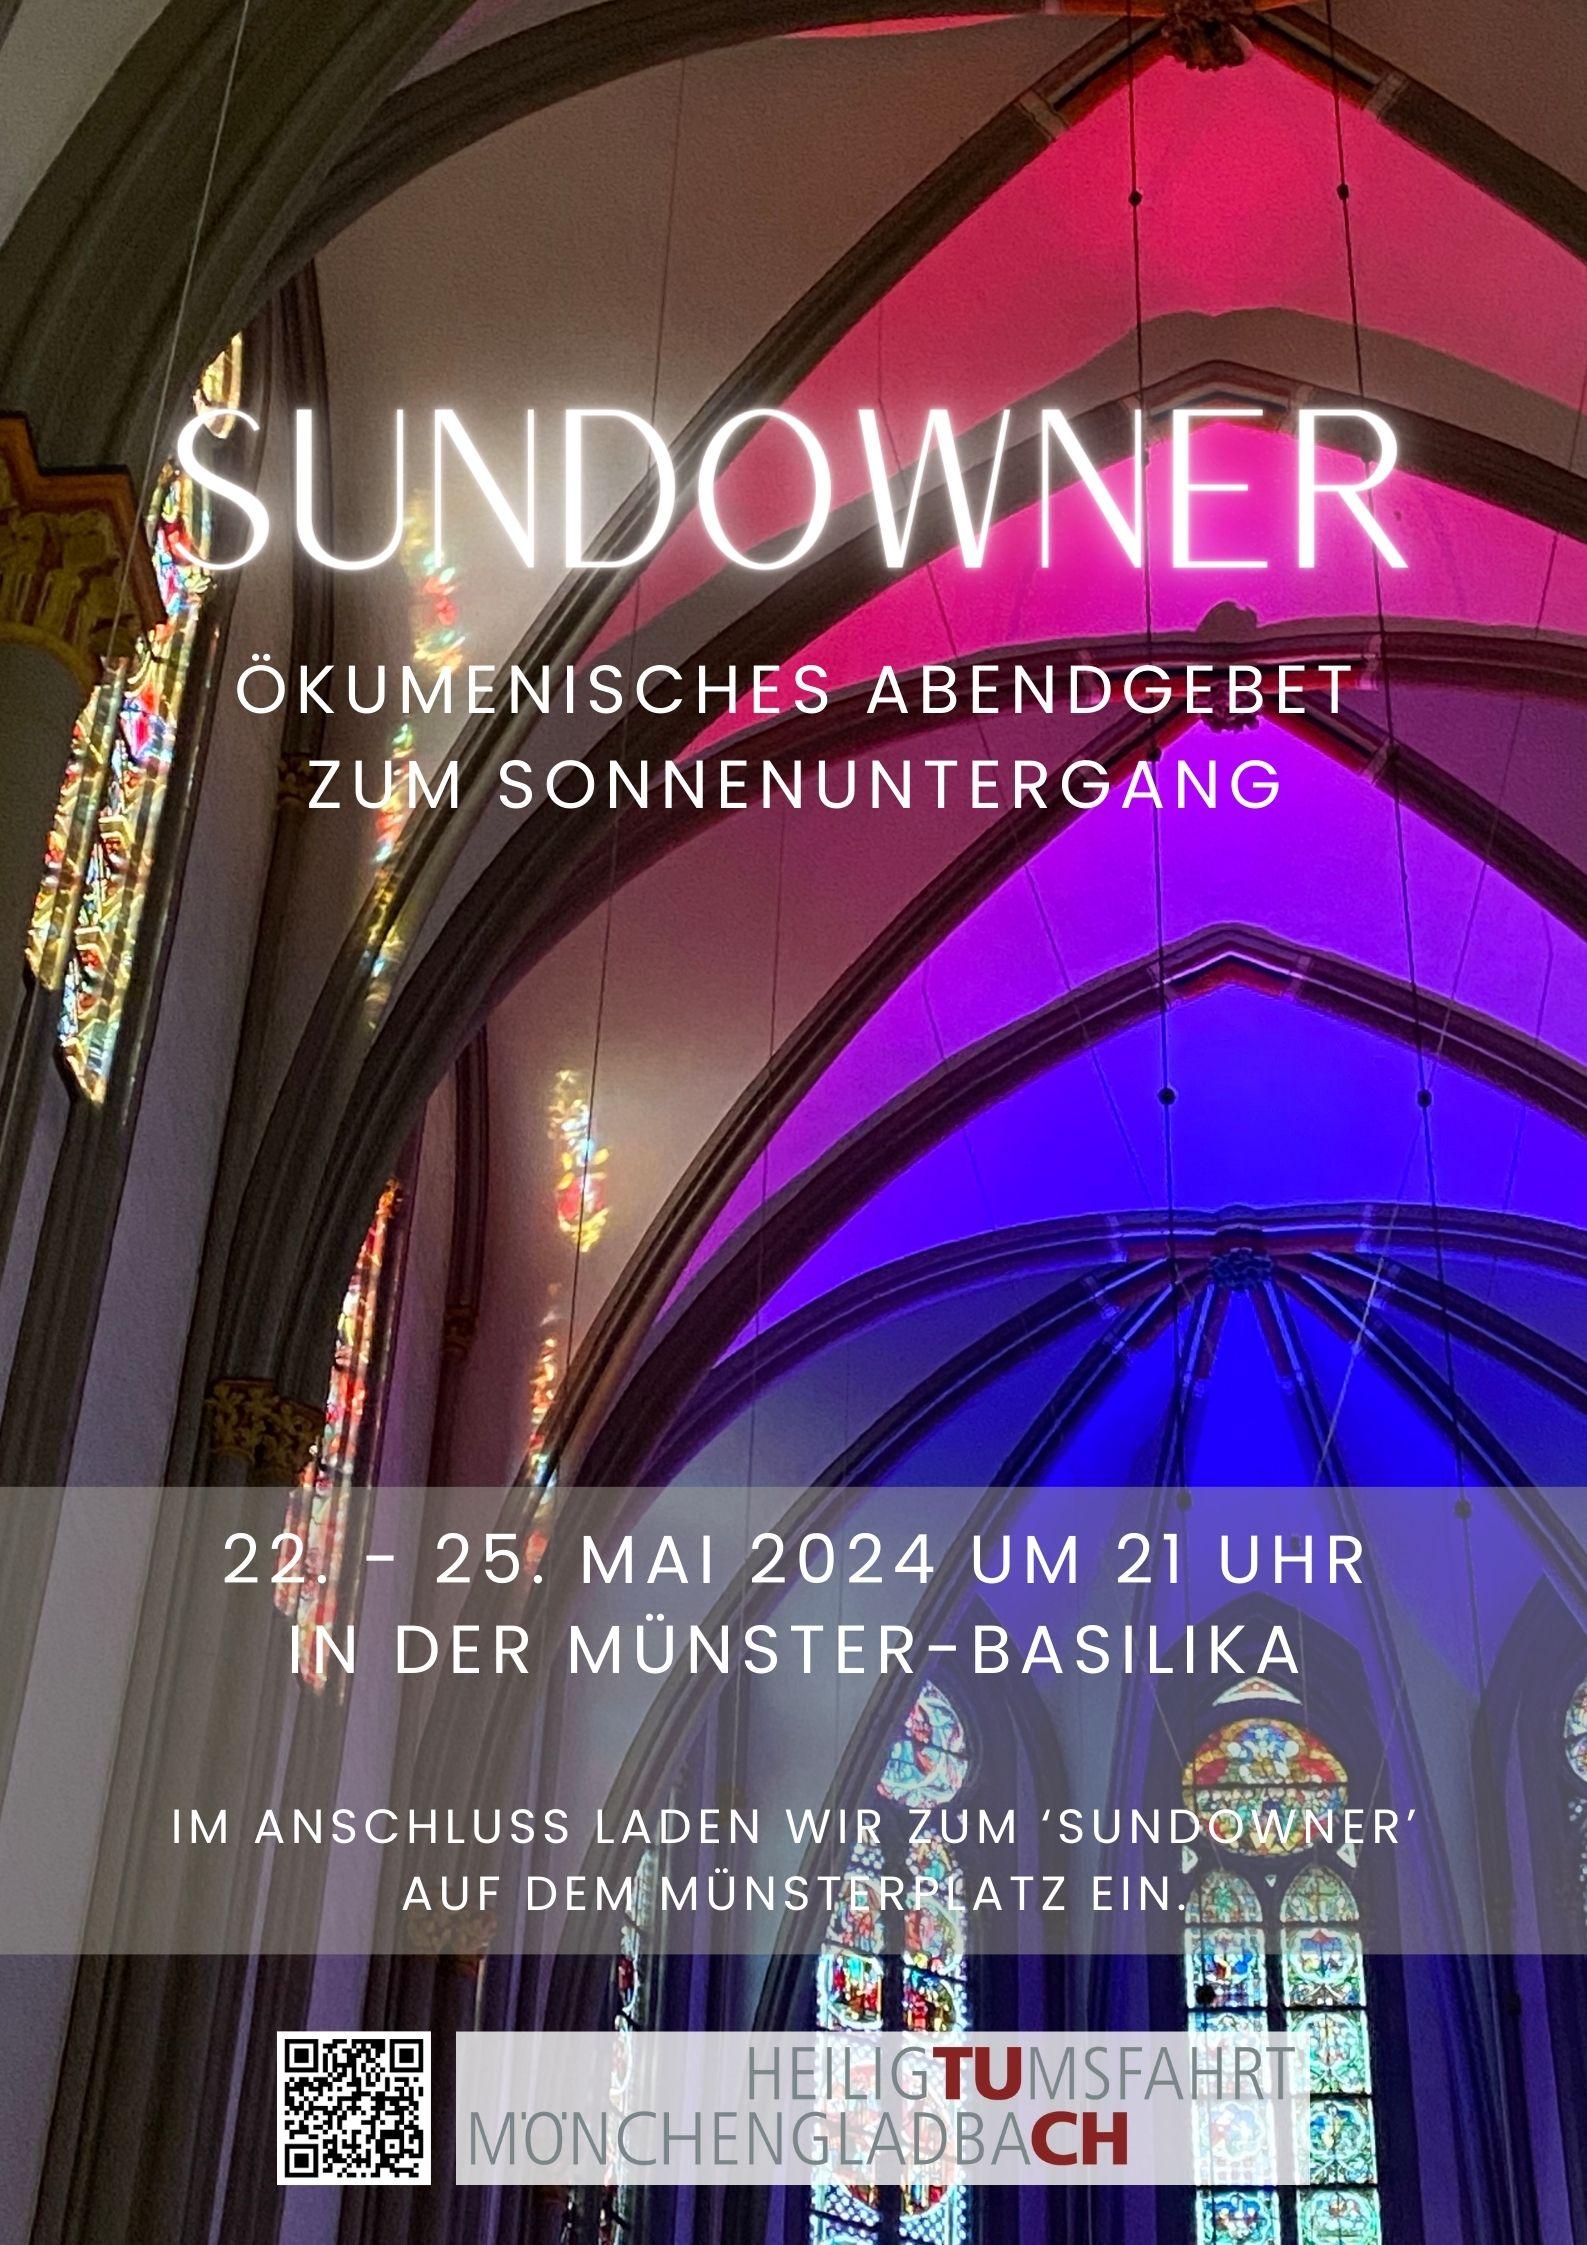 Sundowner 2024 (c) Pfarre St. Vitus